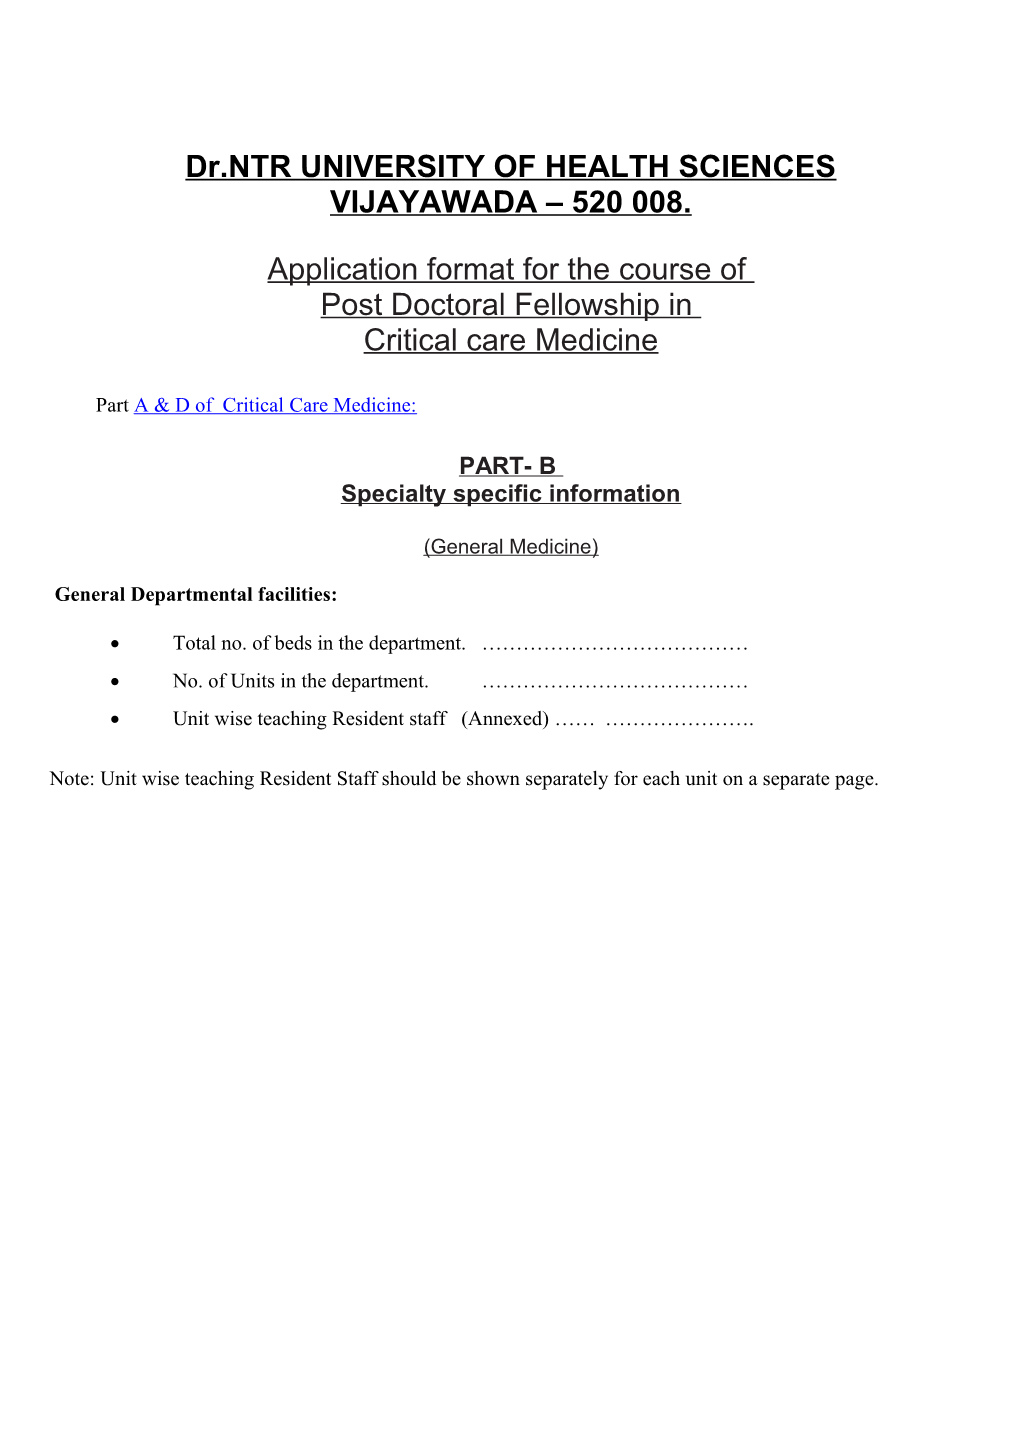 Standard Assessment Form for Postgraduate Courses